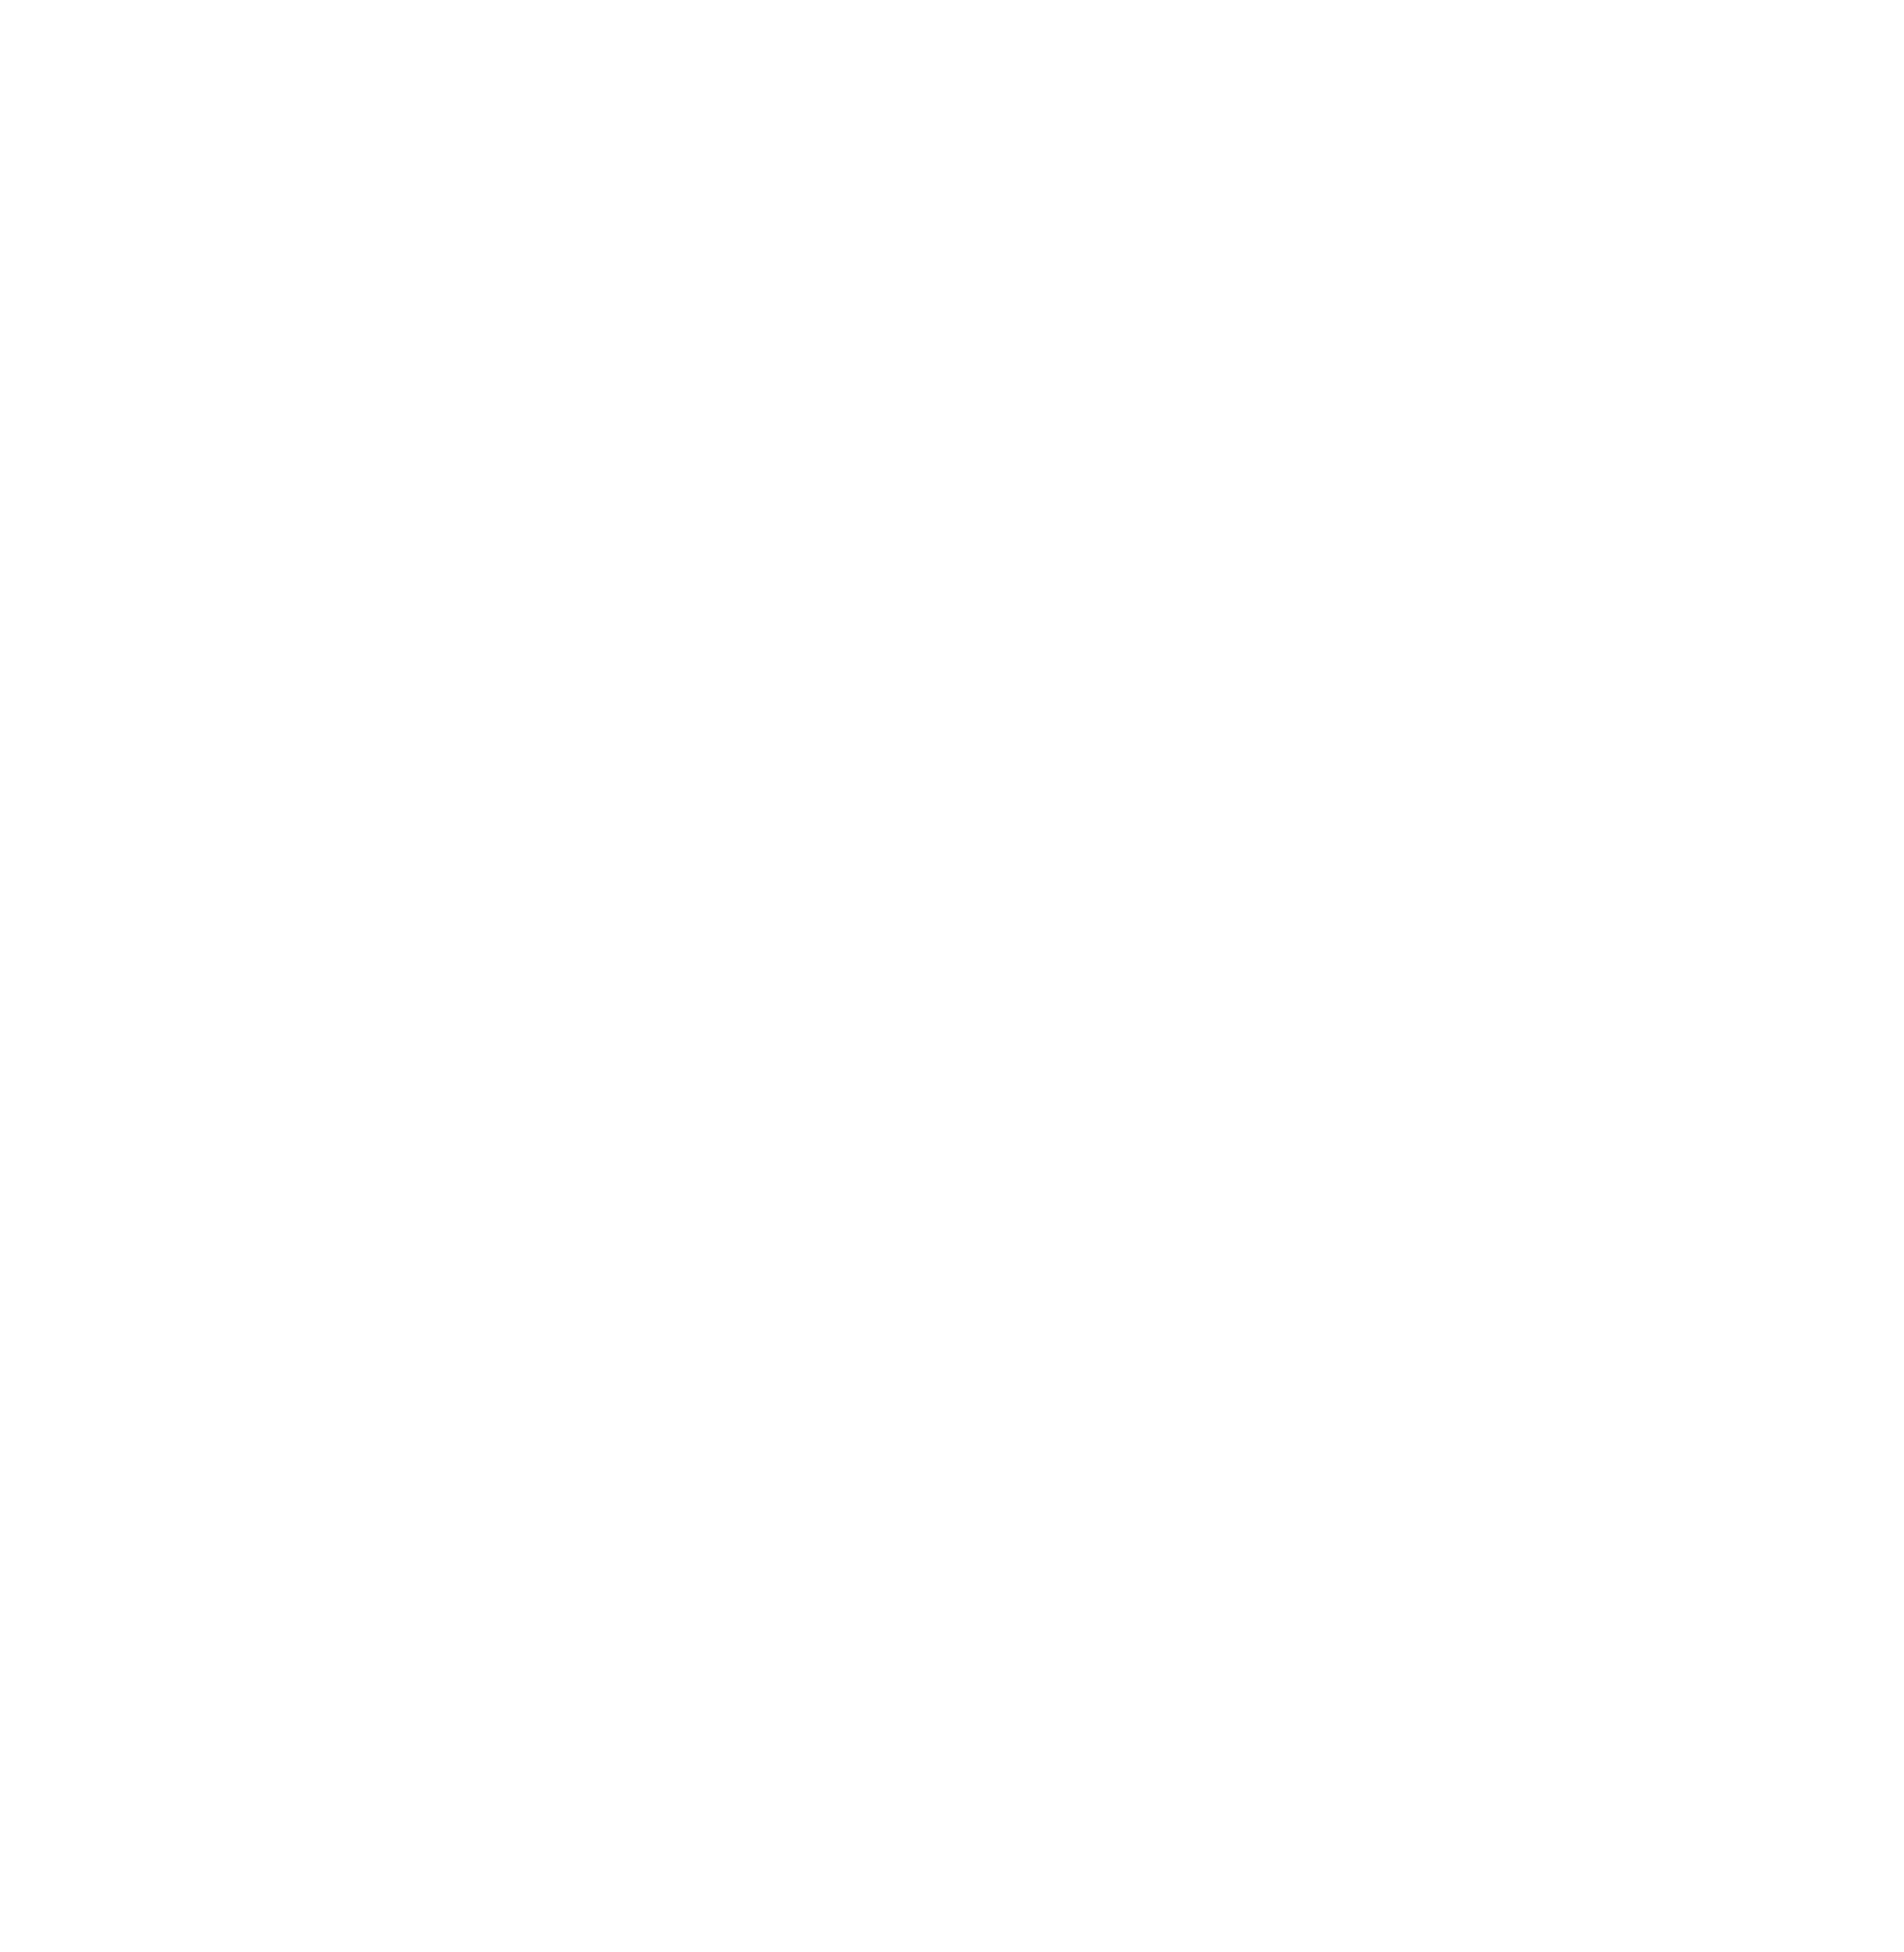 cricket world cup logo